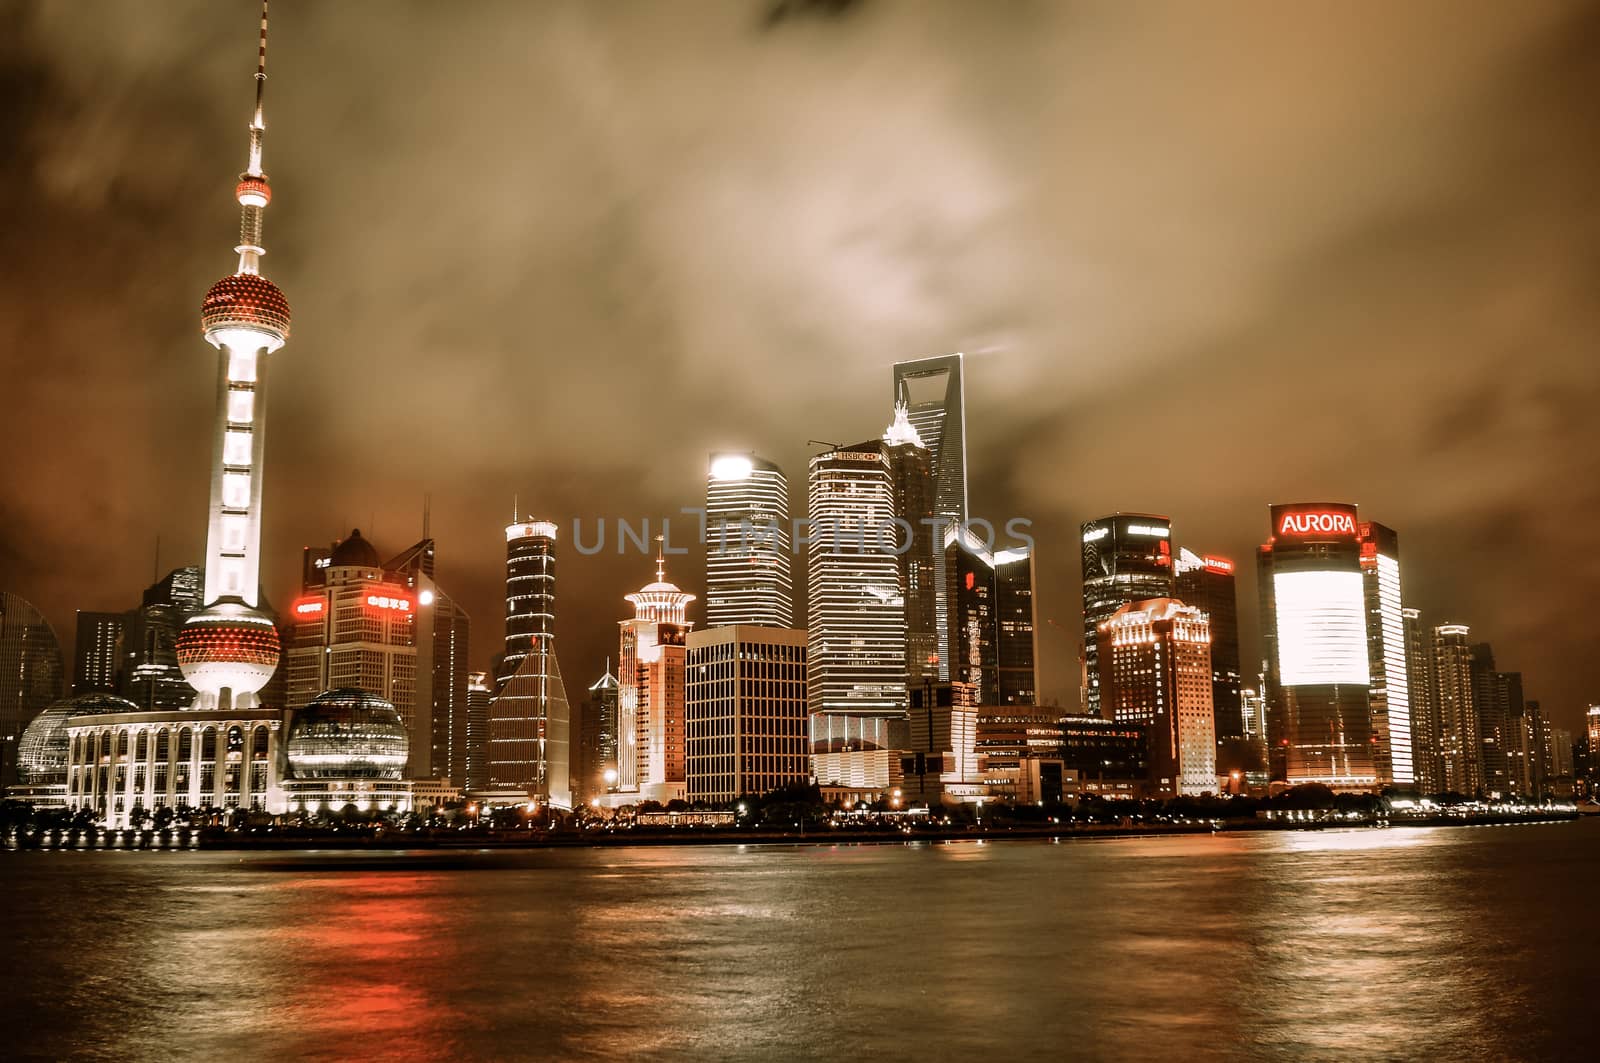 Shanghai, China - August 6, 2011: Cityscape Skyline taken from t by weltreisendertj